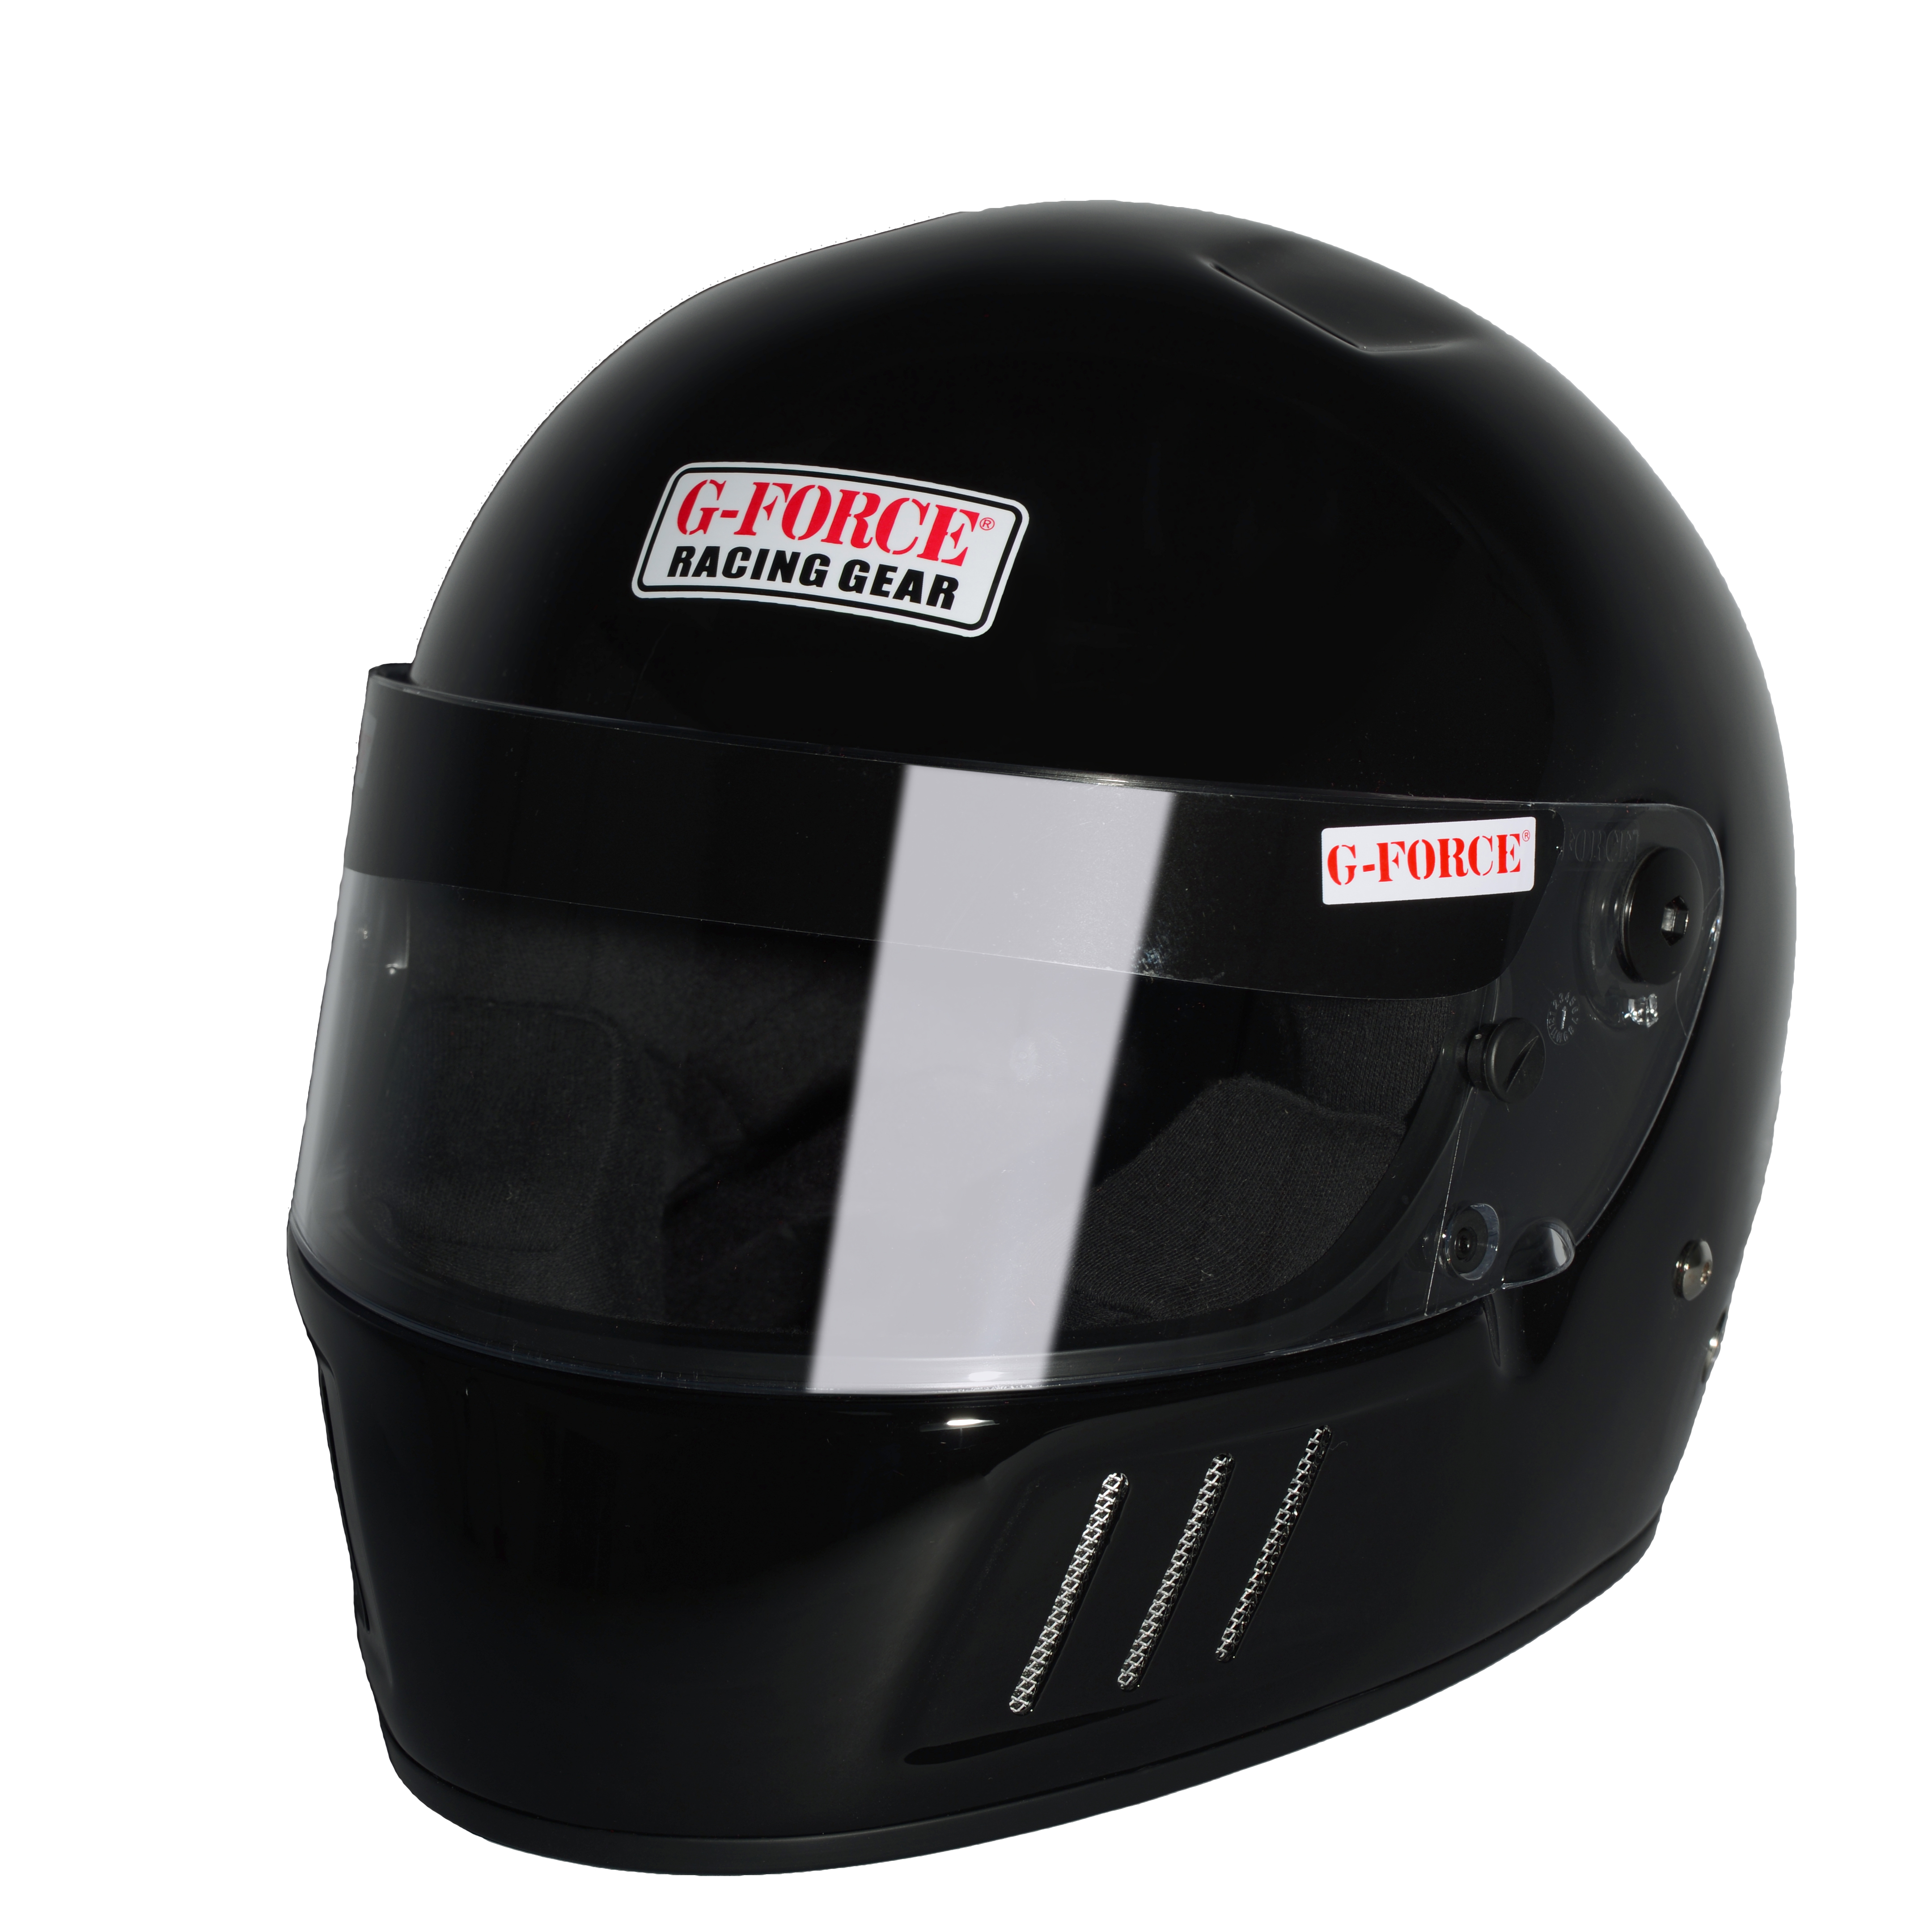 G-Force Racing Gear Helmet, PRO ELIMINATOR SA2010 FULL FACE LARGE BLACK